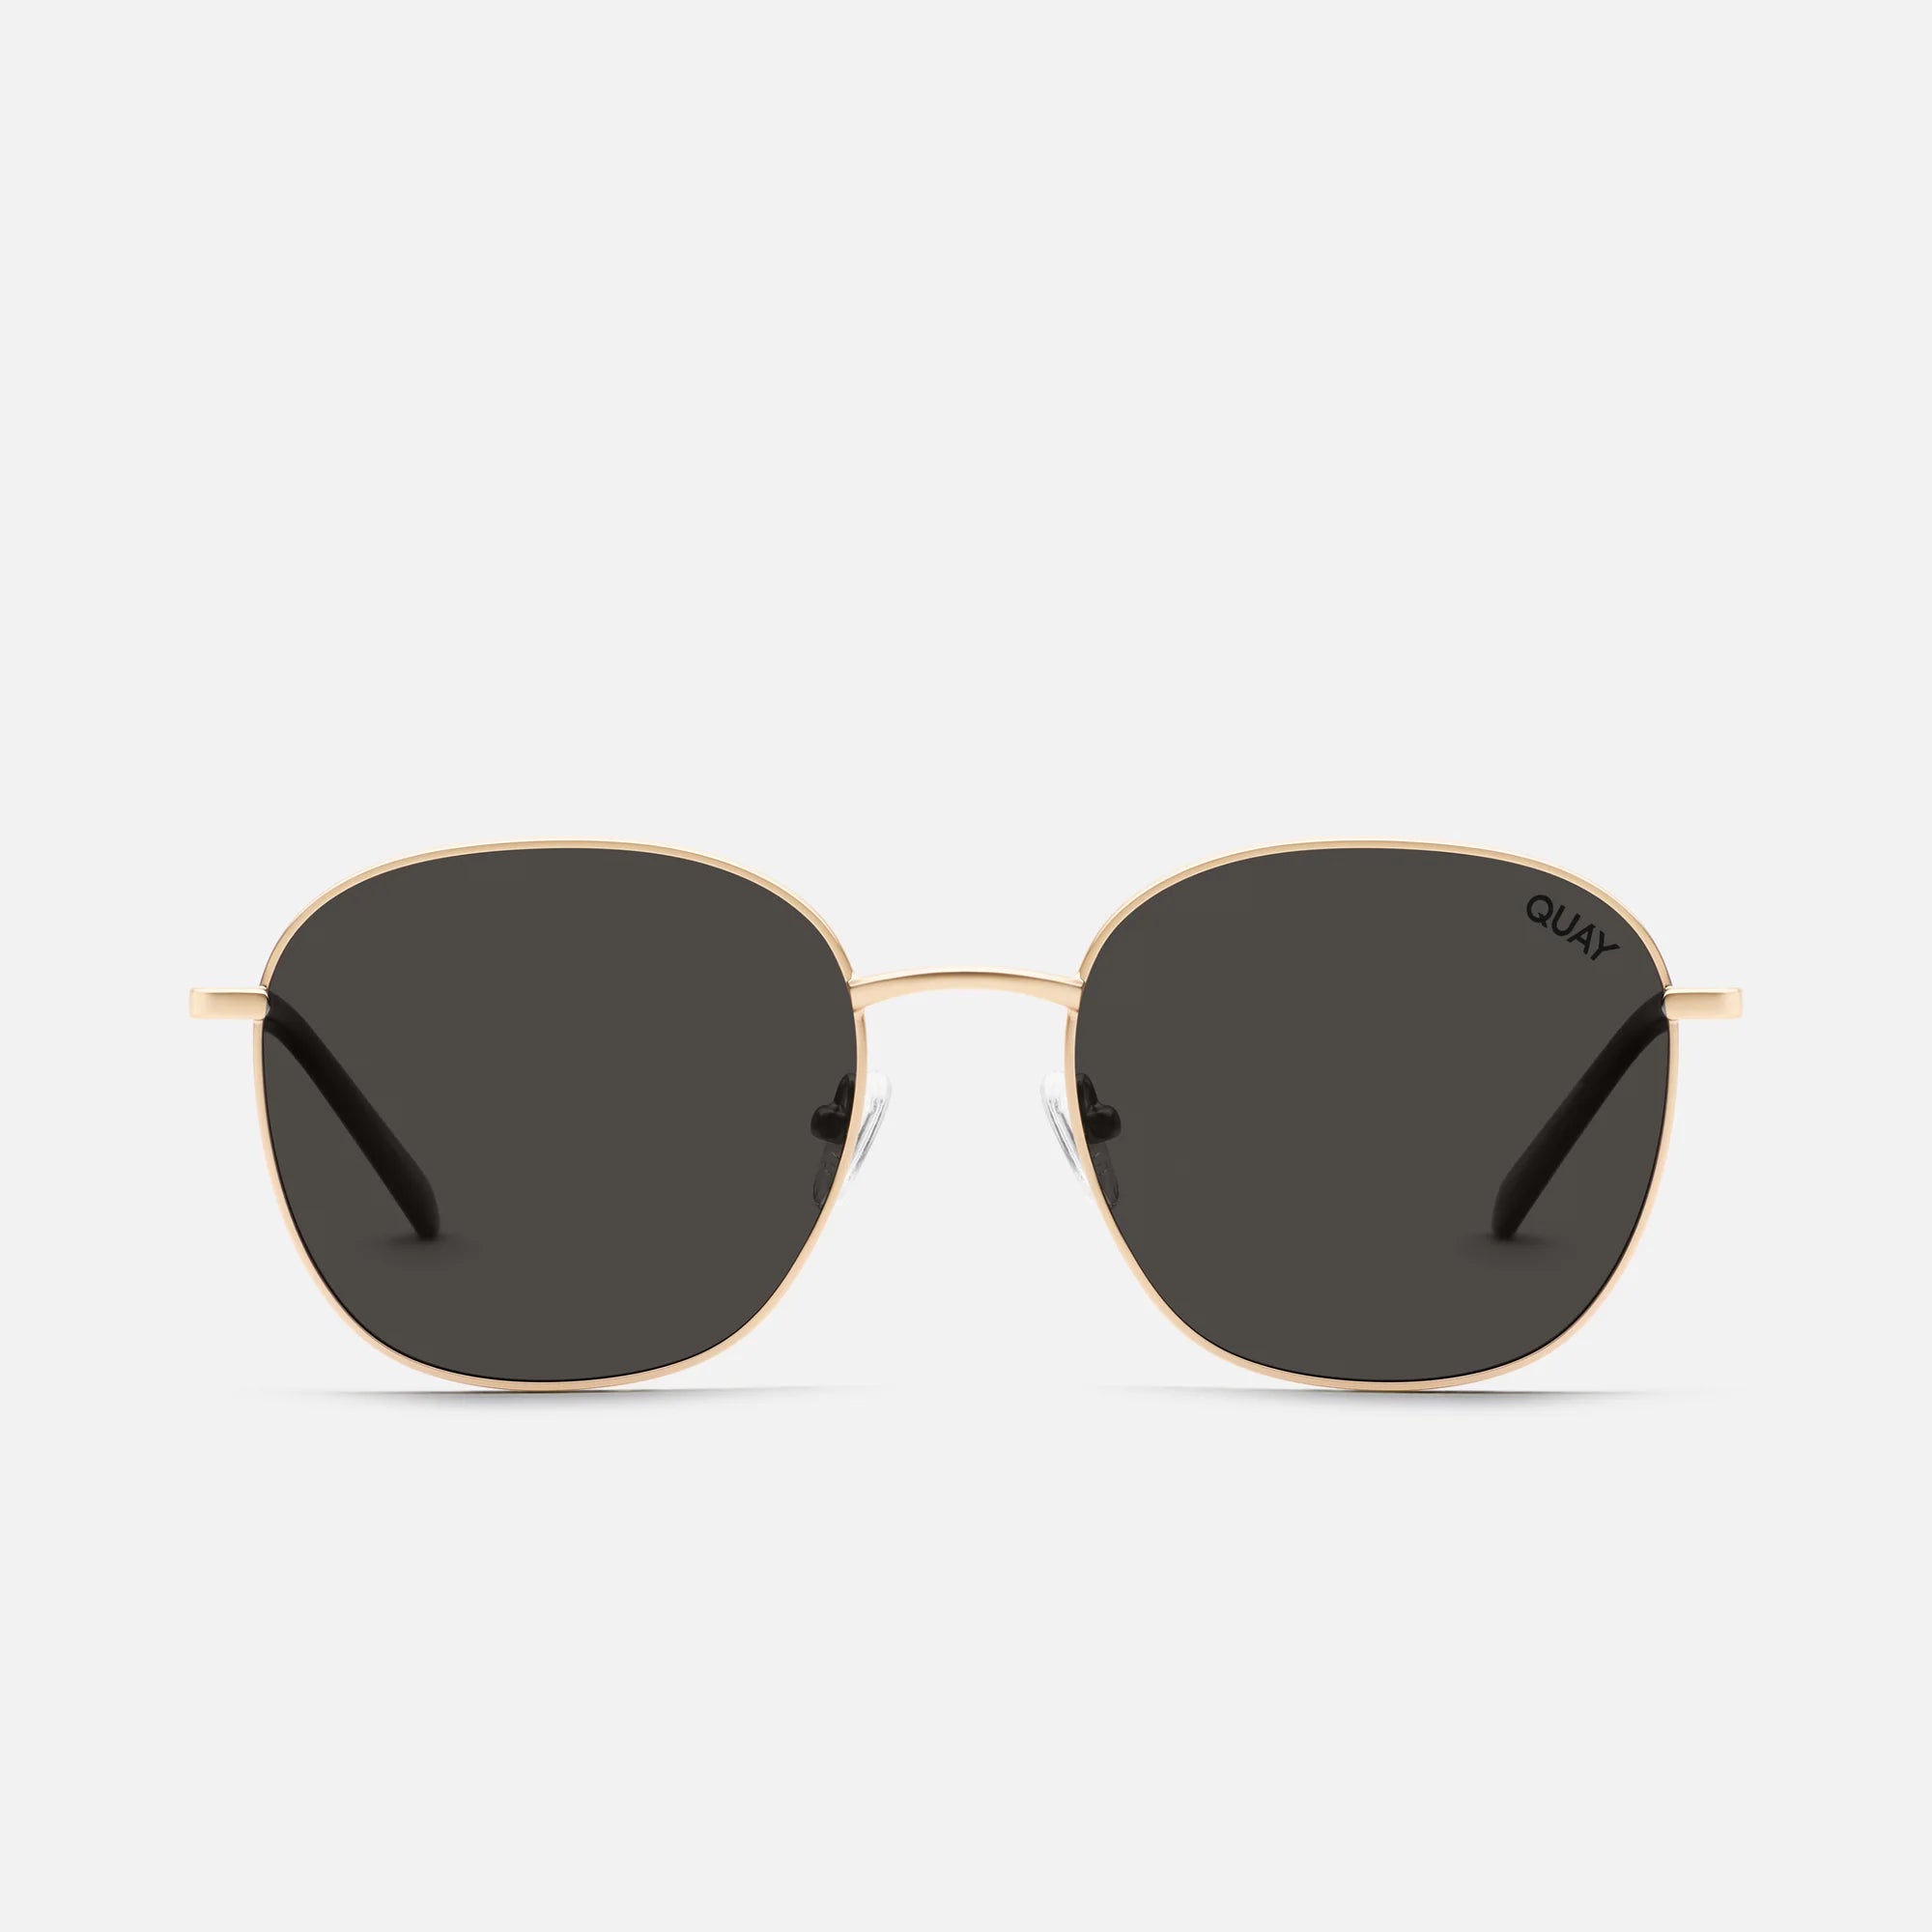 Quay Sunglasses - Jezabell - GOLD